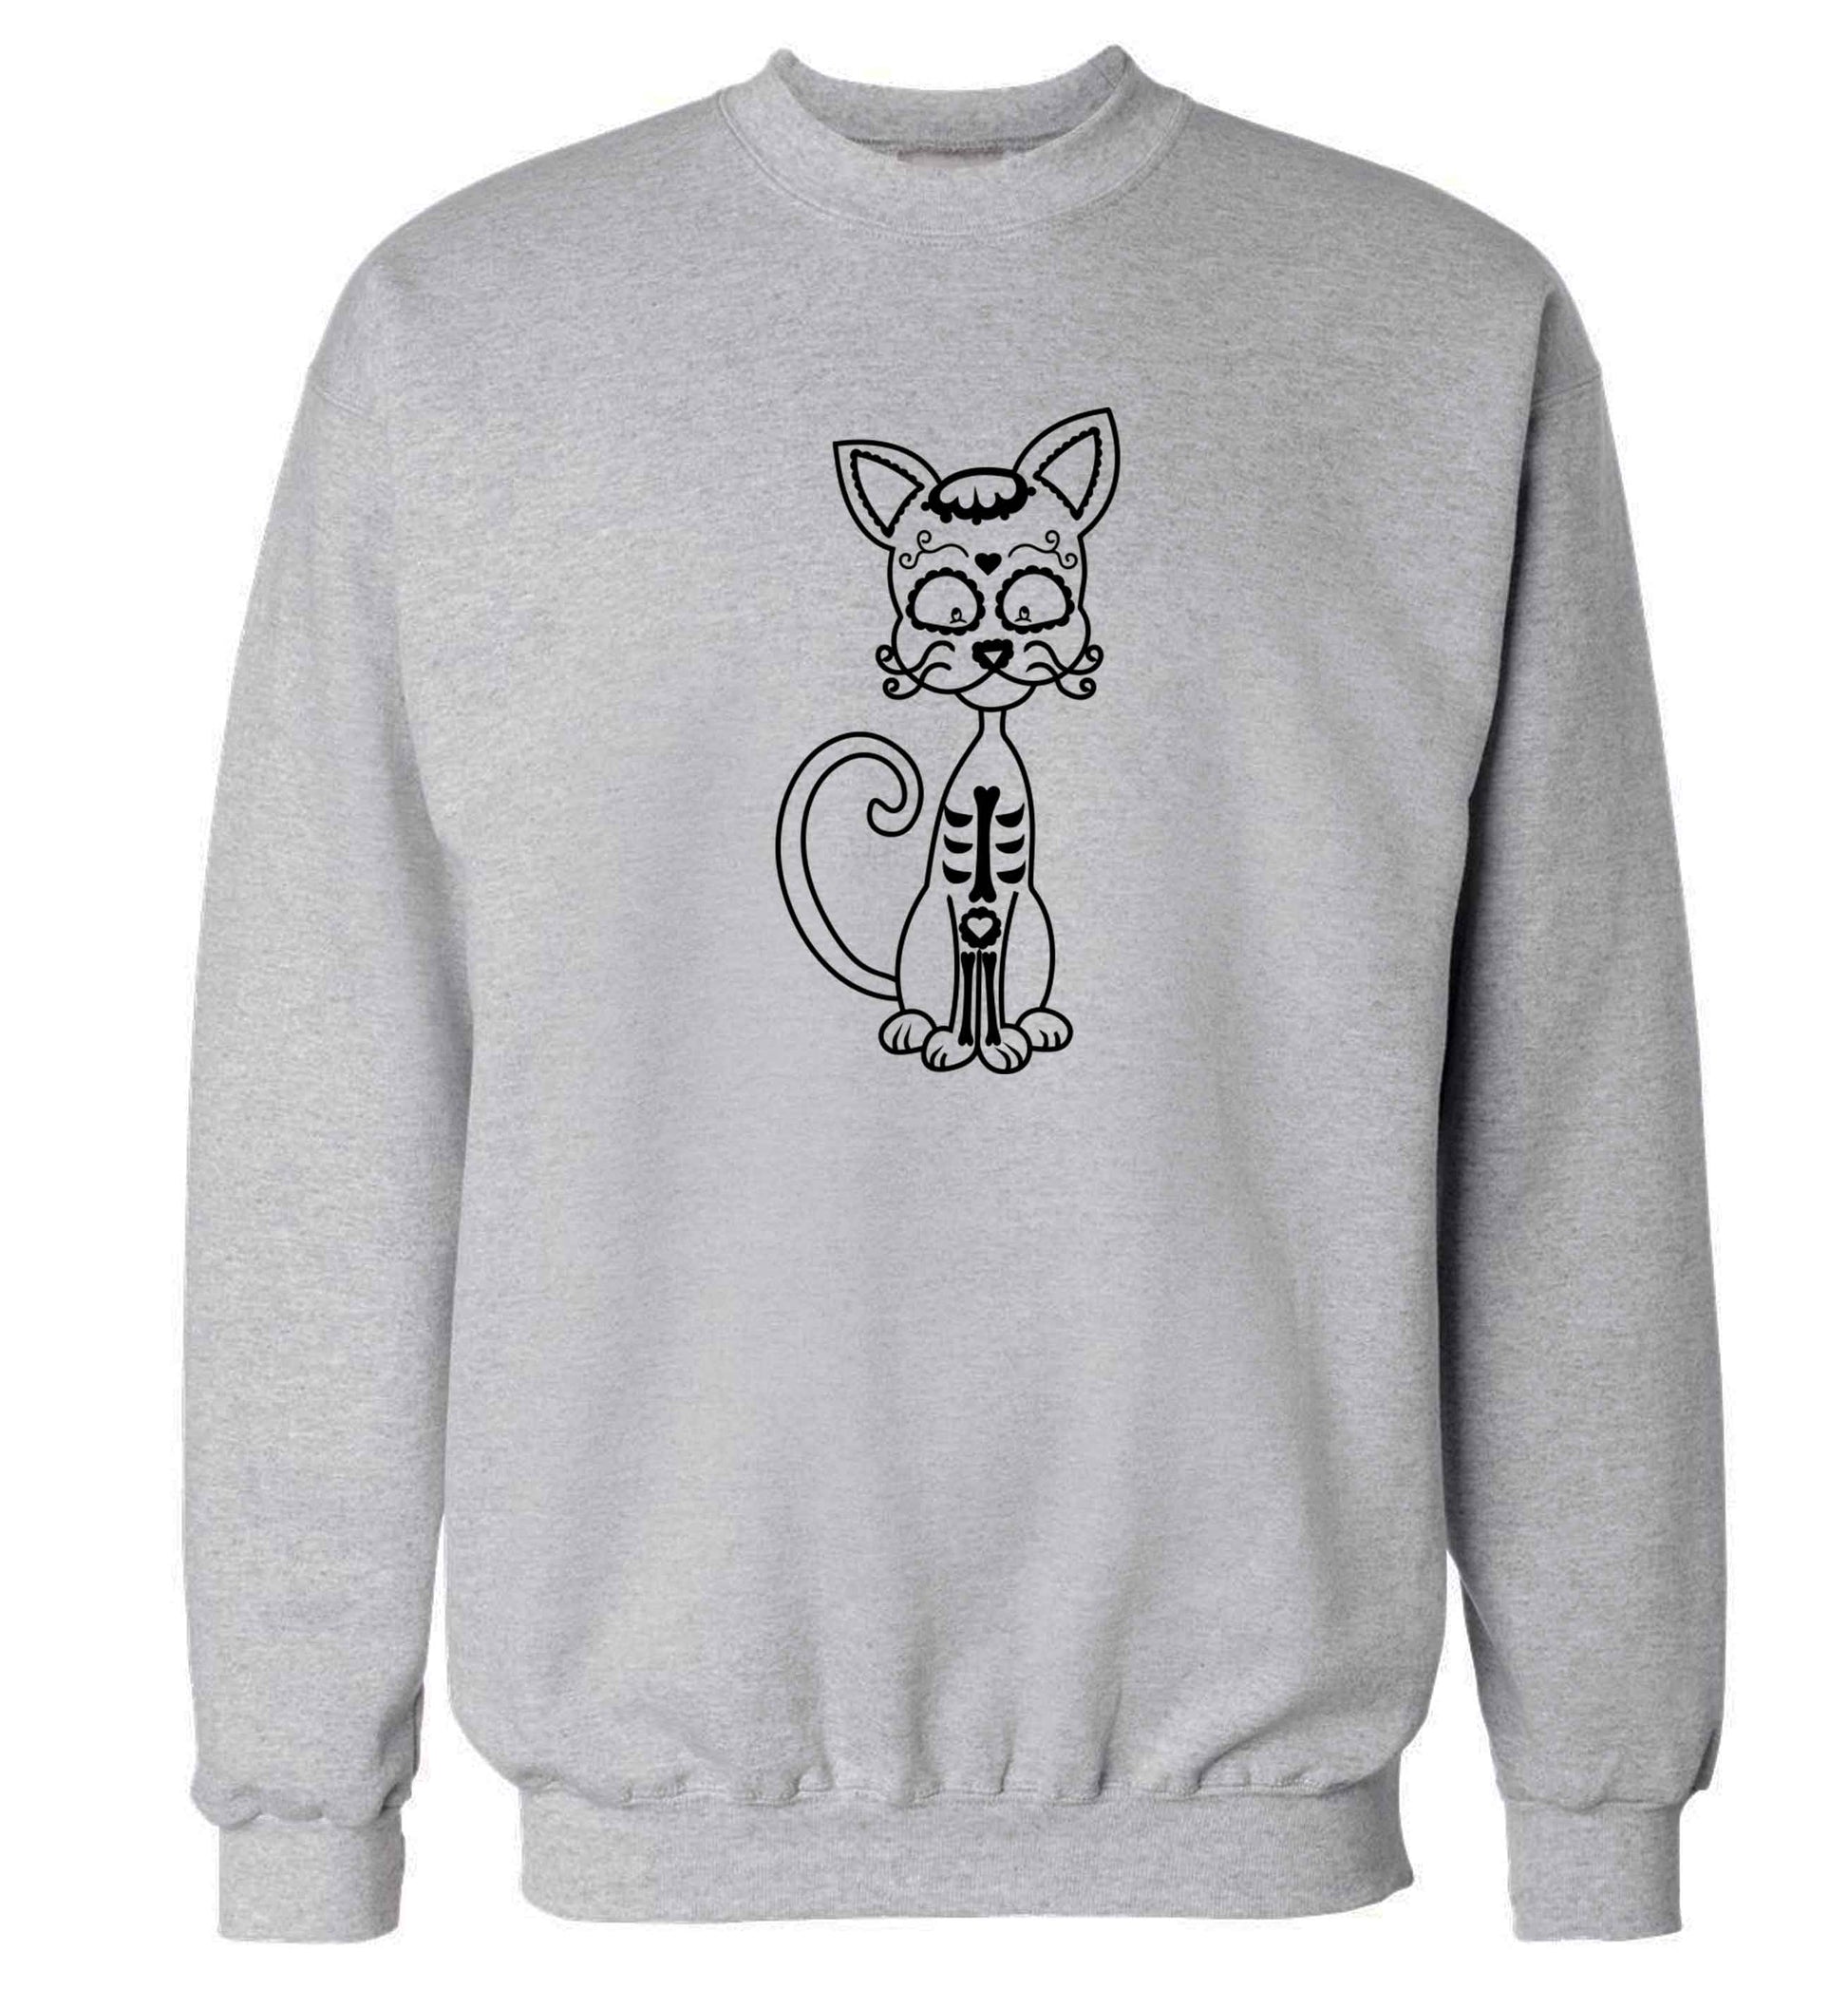 Cat sugar skull adult's unisex grey sweater 2XL